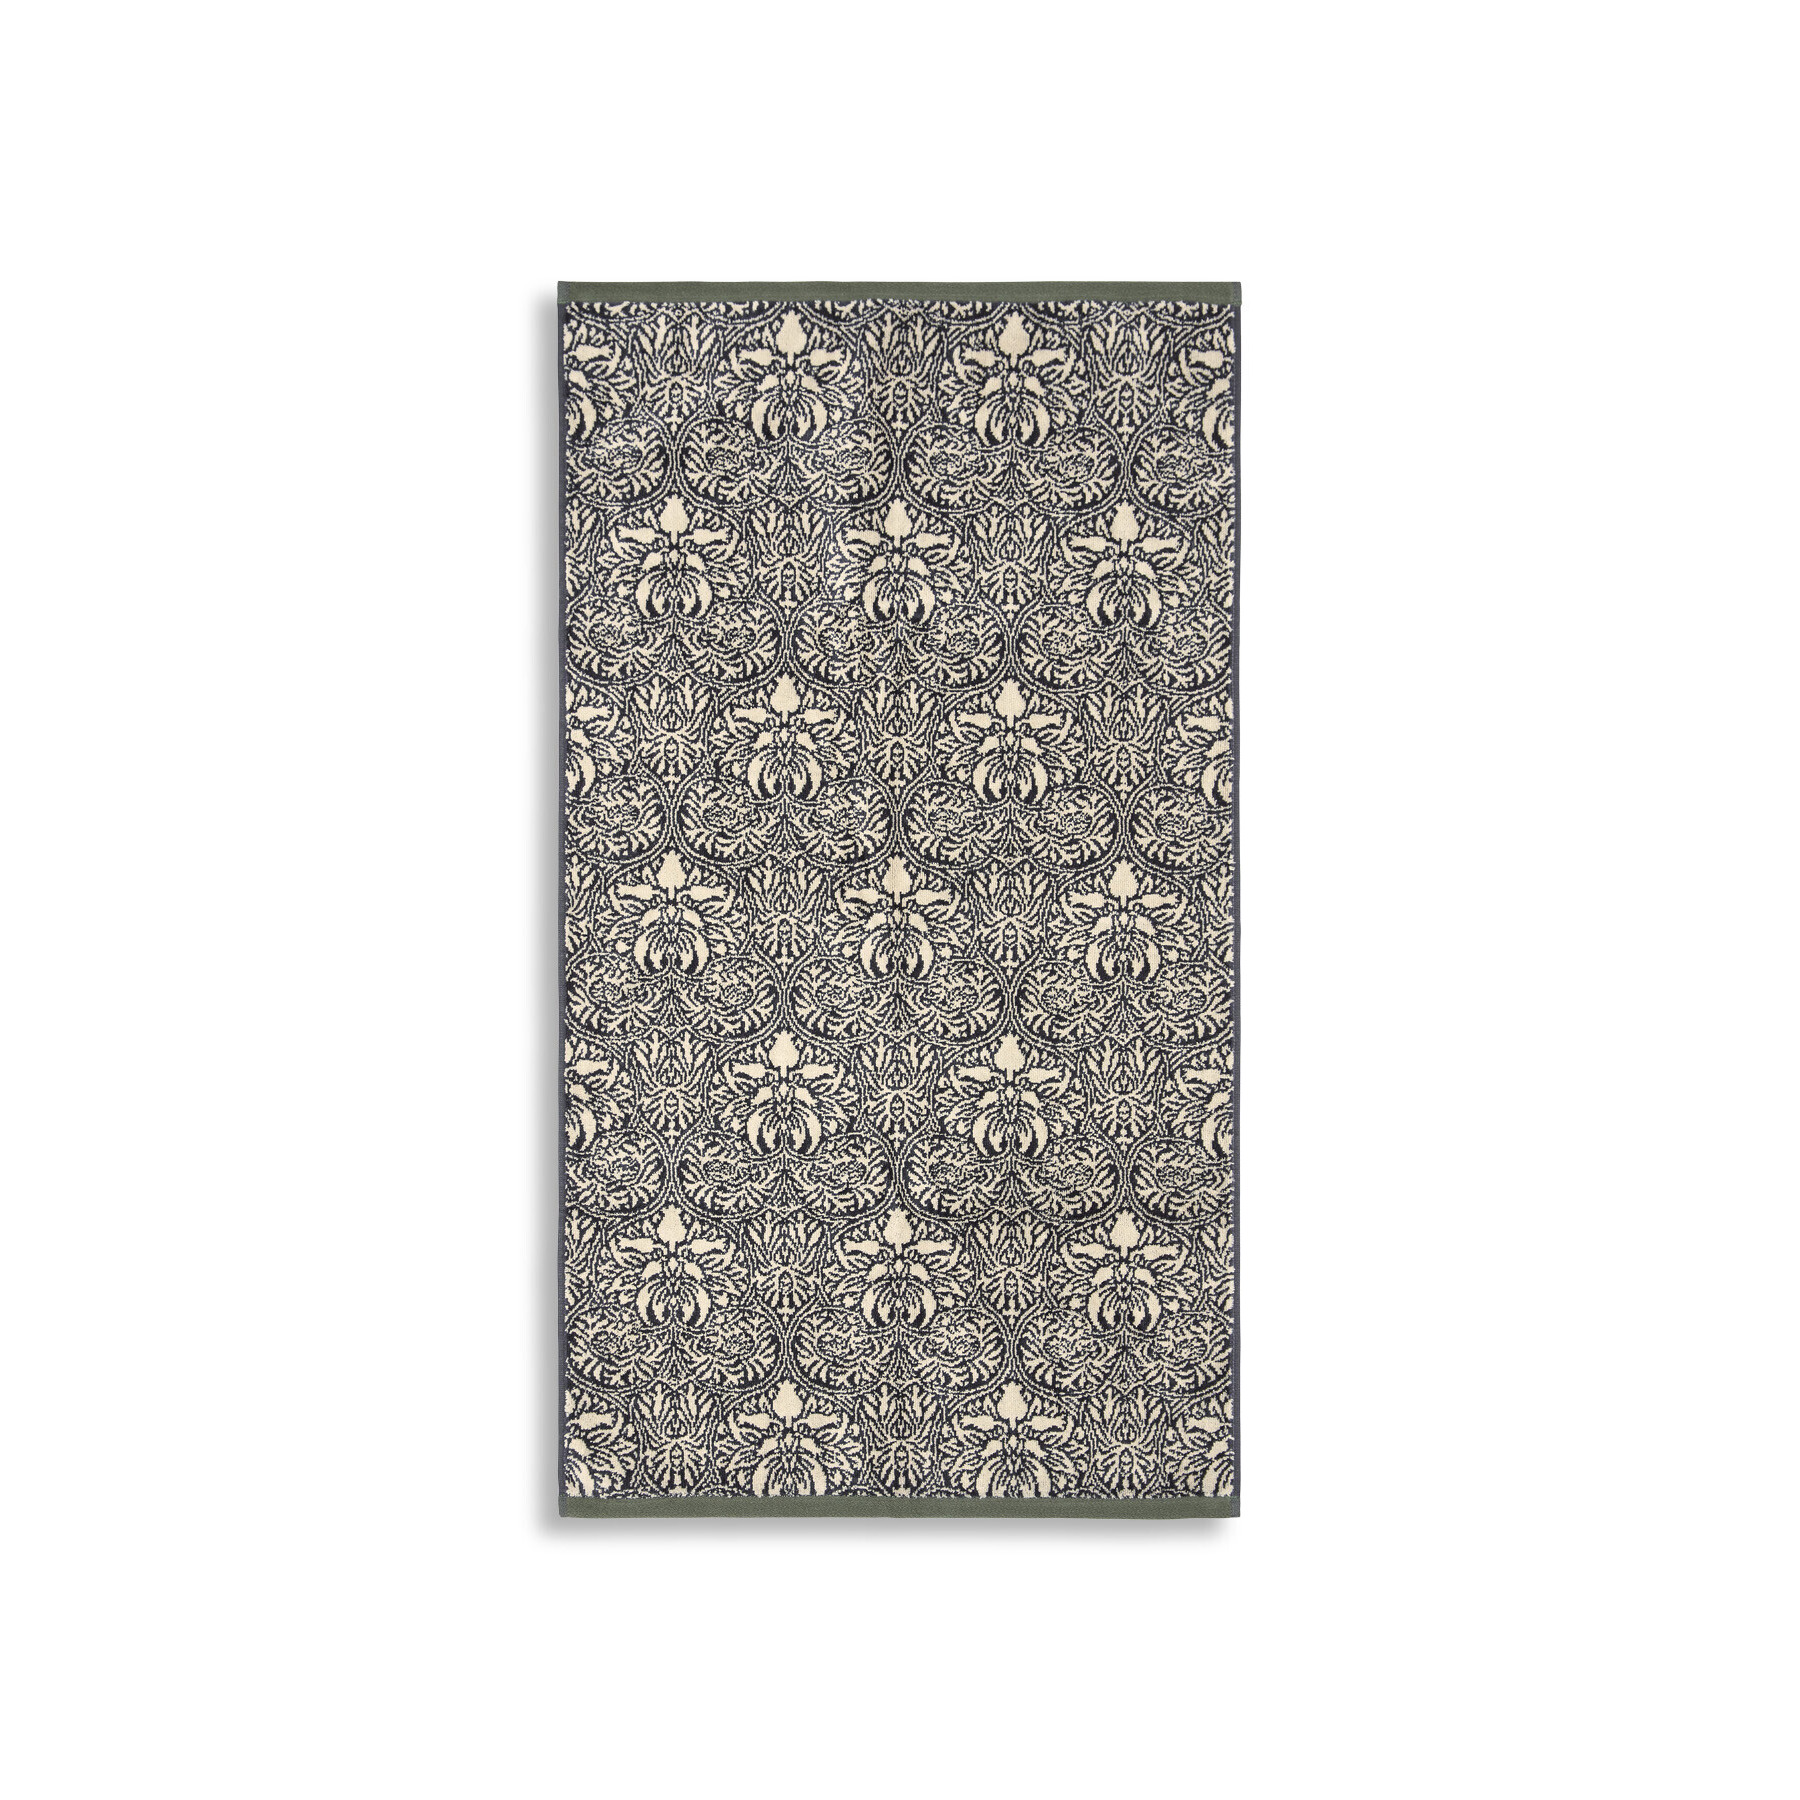 Morris & Co Crown Imperial Bath Towel Charcoal Grey - image 1